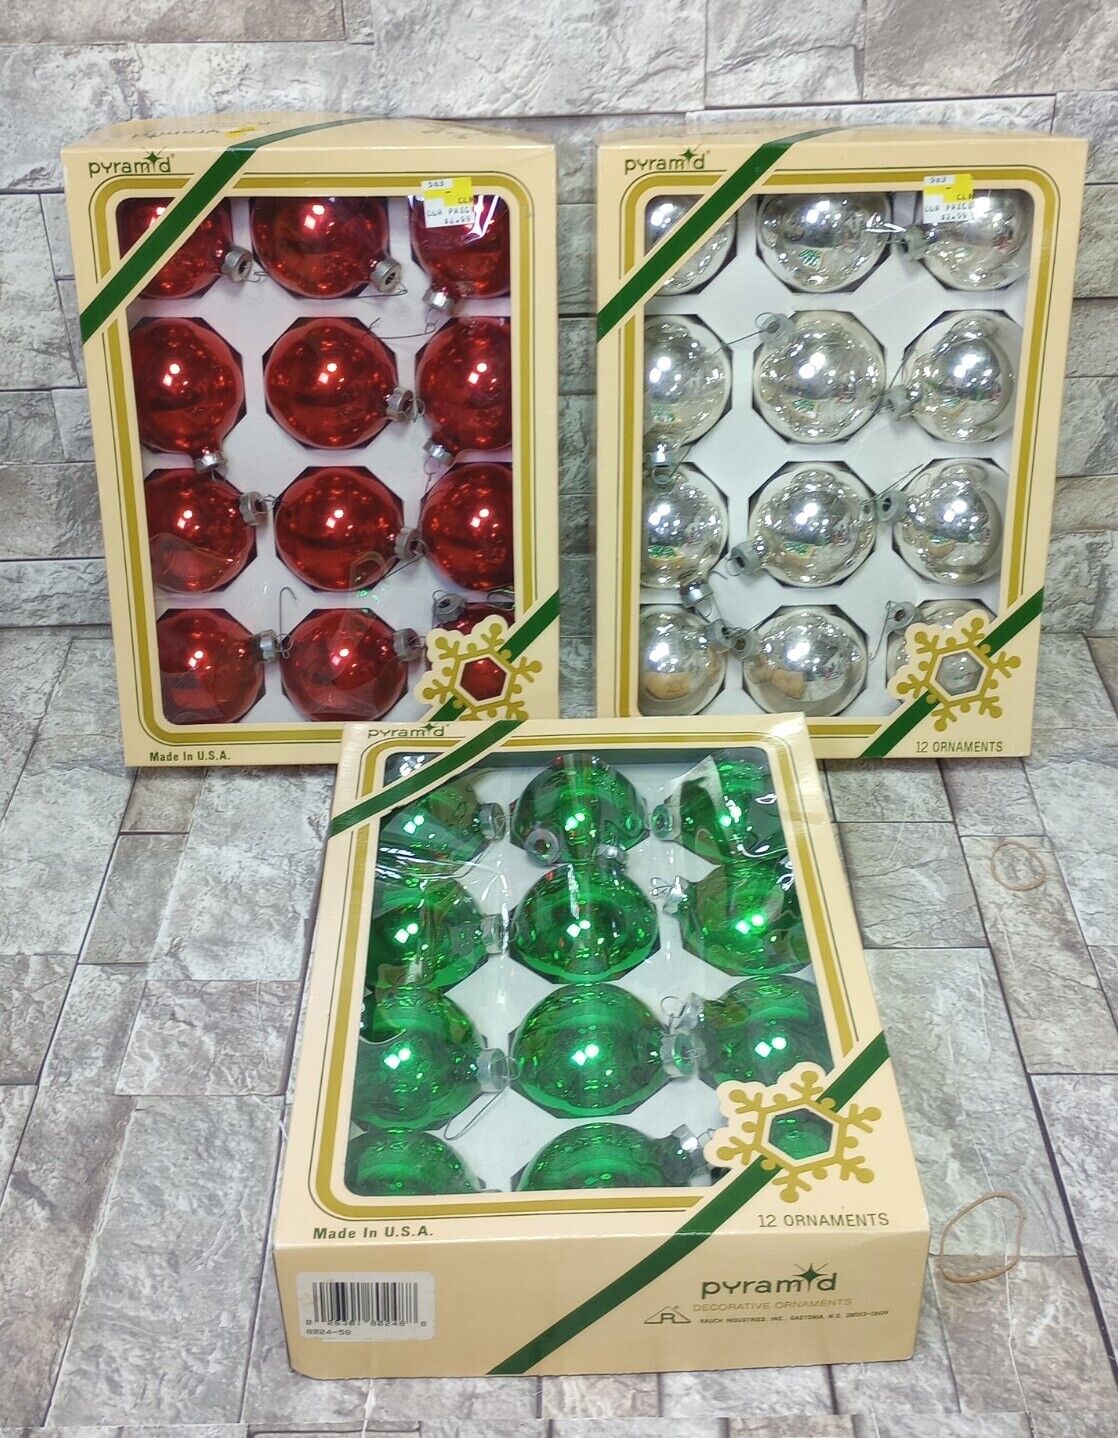 VTG Rauch Pyramid Glass Ball Christmas Ornaments Set of 3 Boxes - 36 Balls 2.25